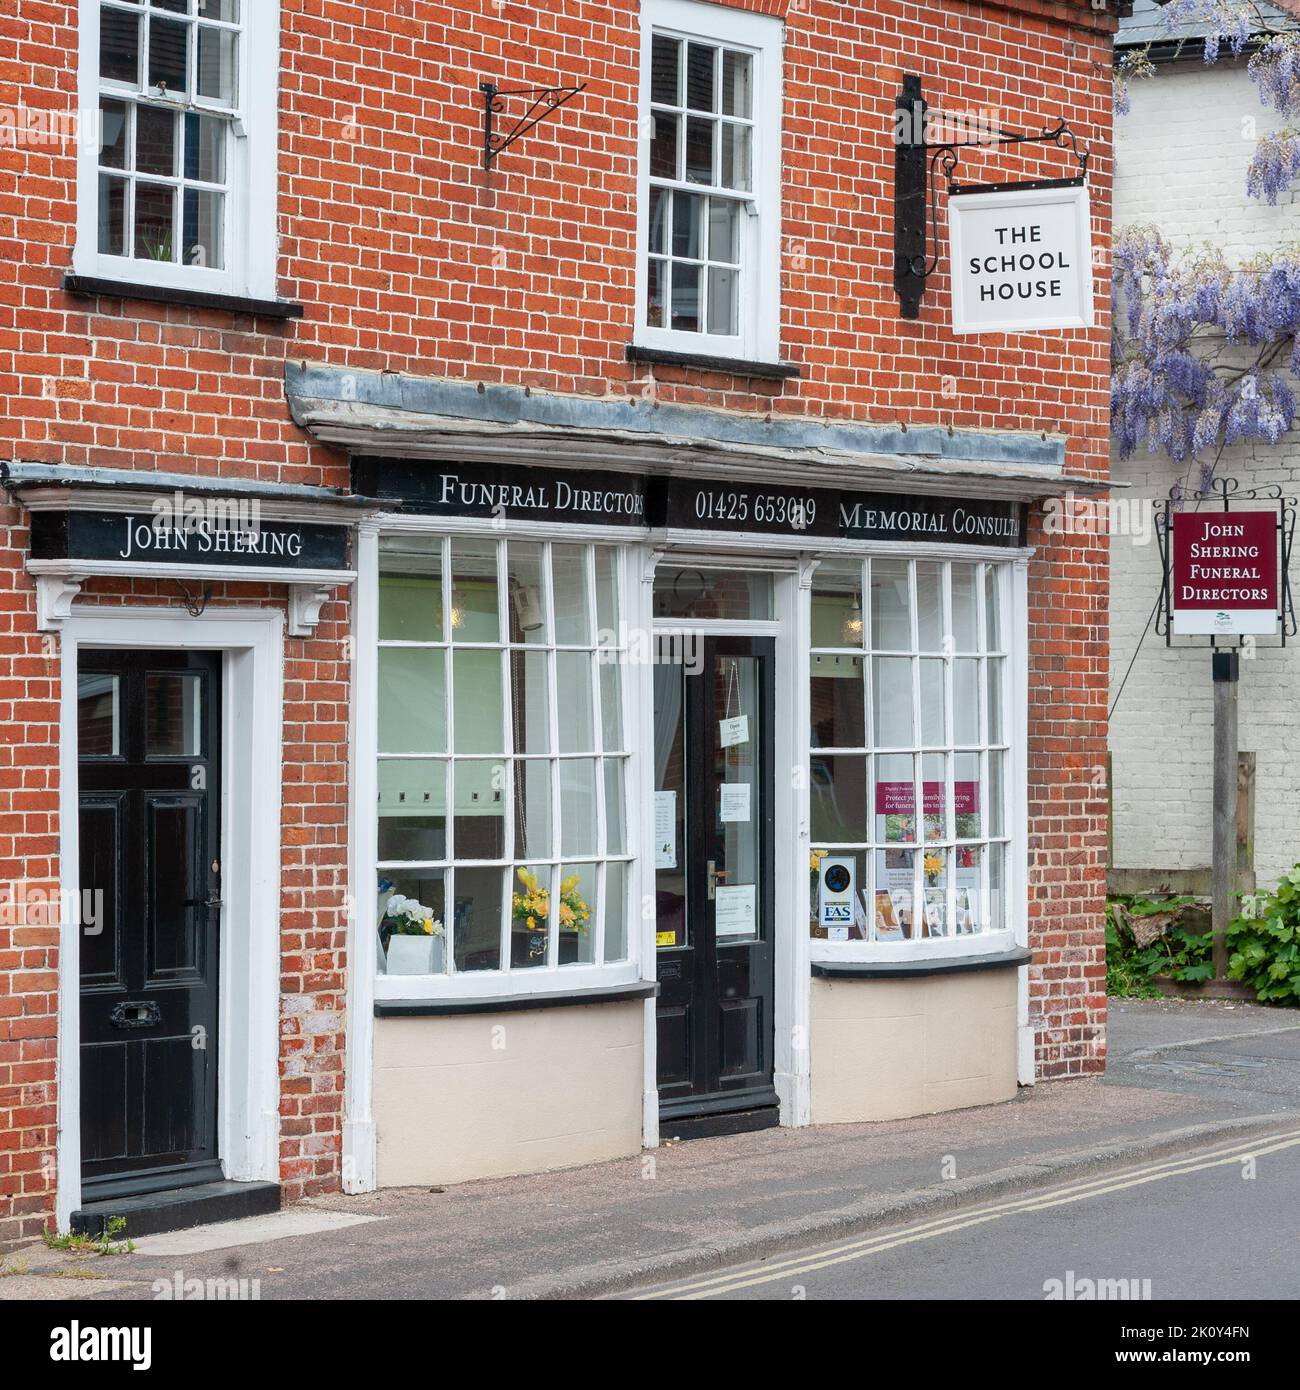 Funeral directors shop front, UK Stock Photo